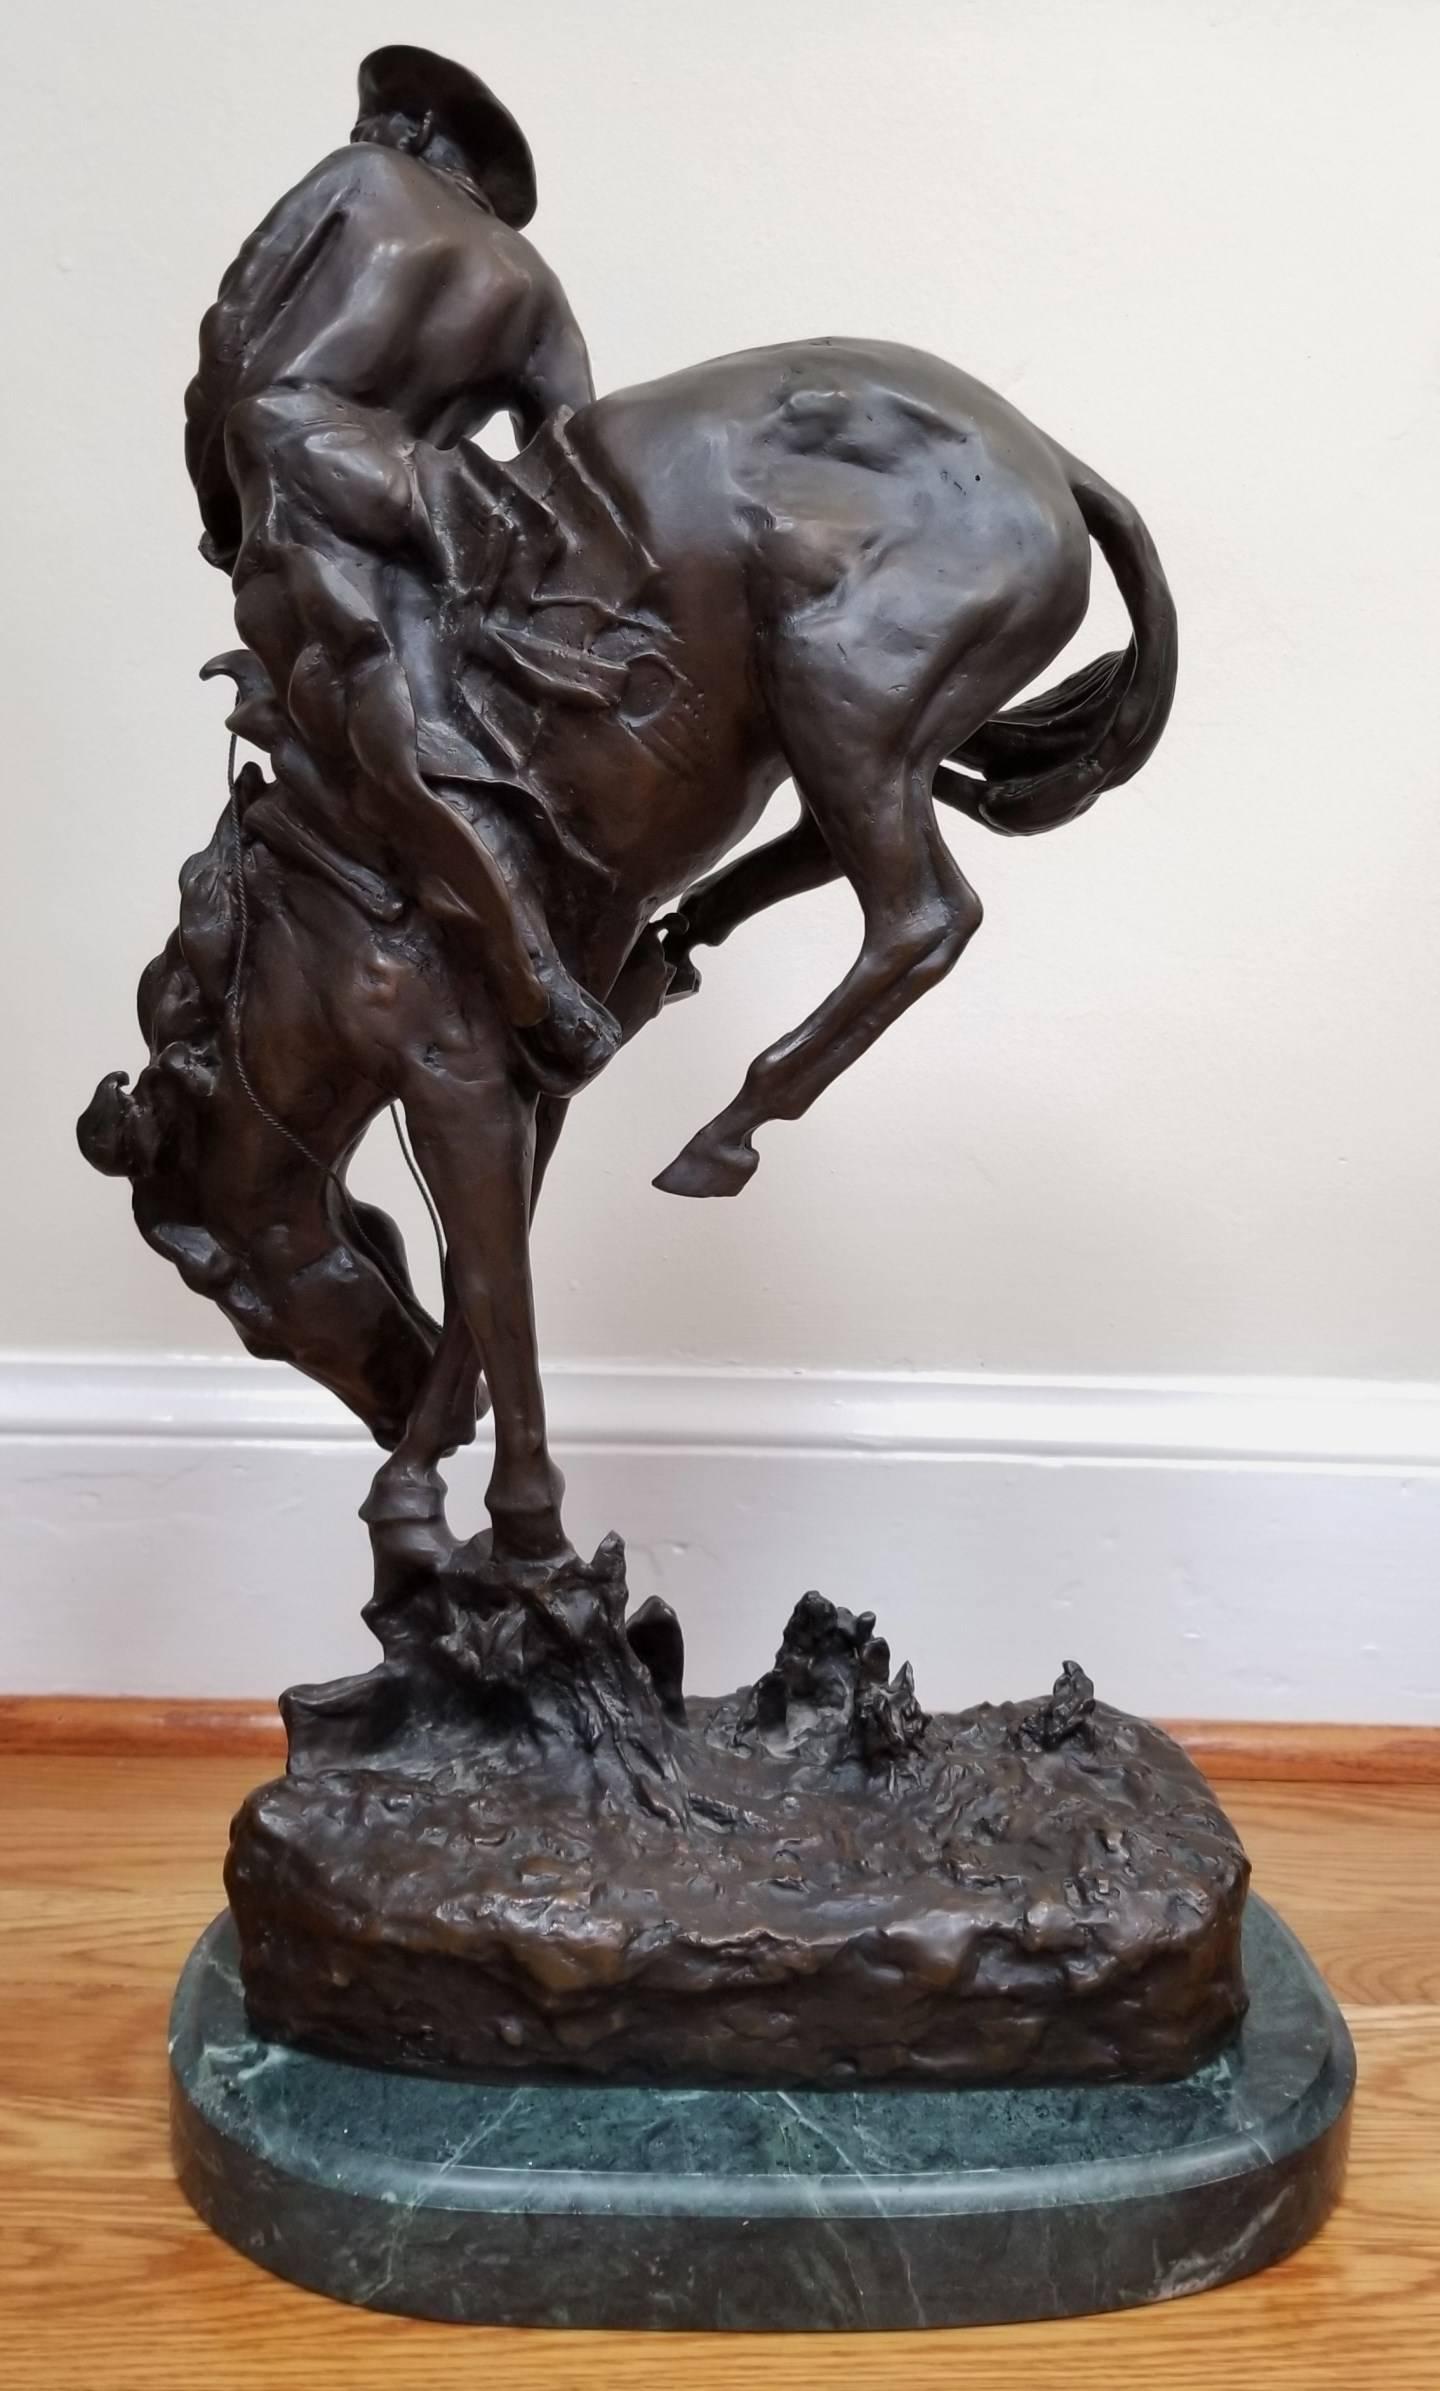 An original lost-wax bronze cast sculpture after American artist Frederic Remington (1861-1909) titled 